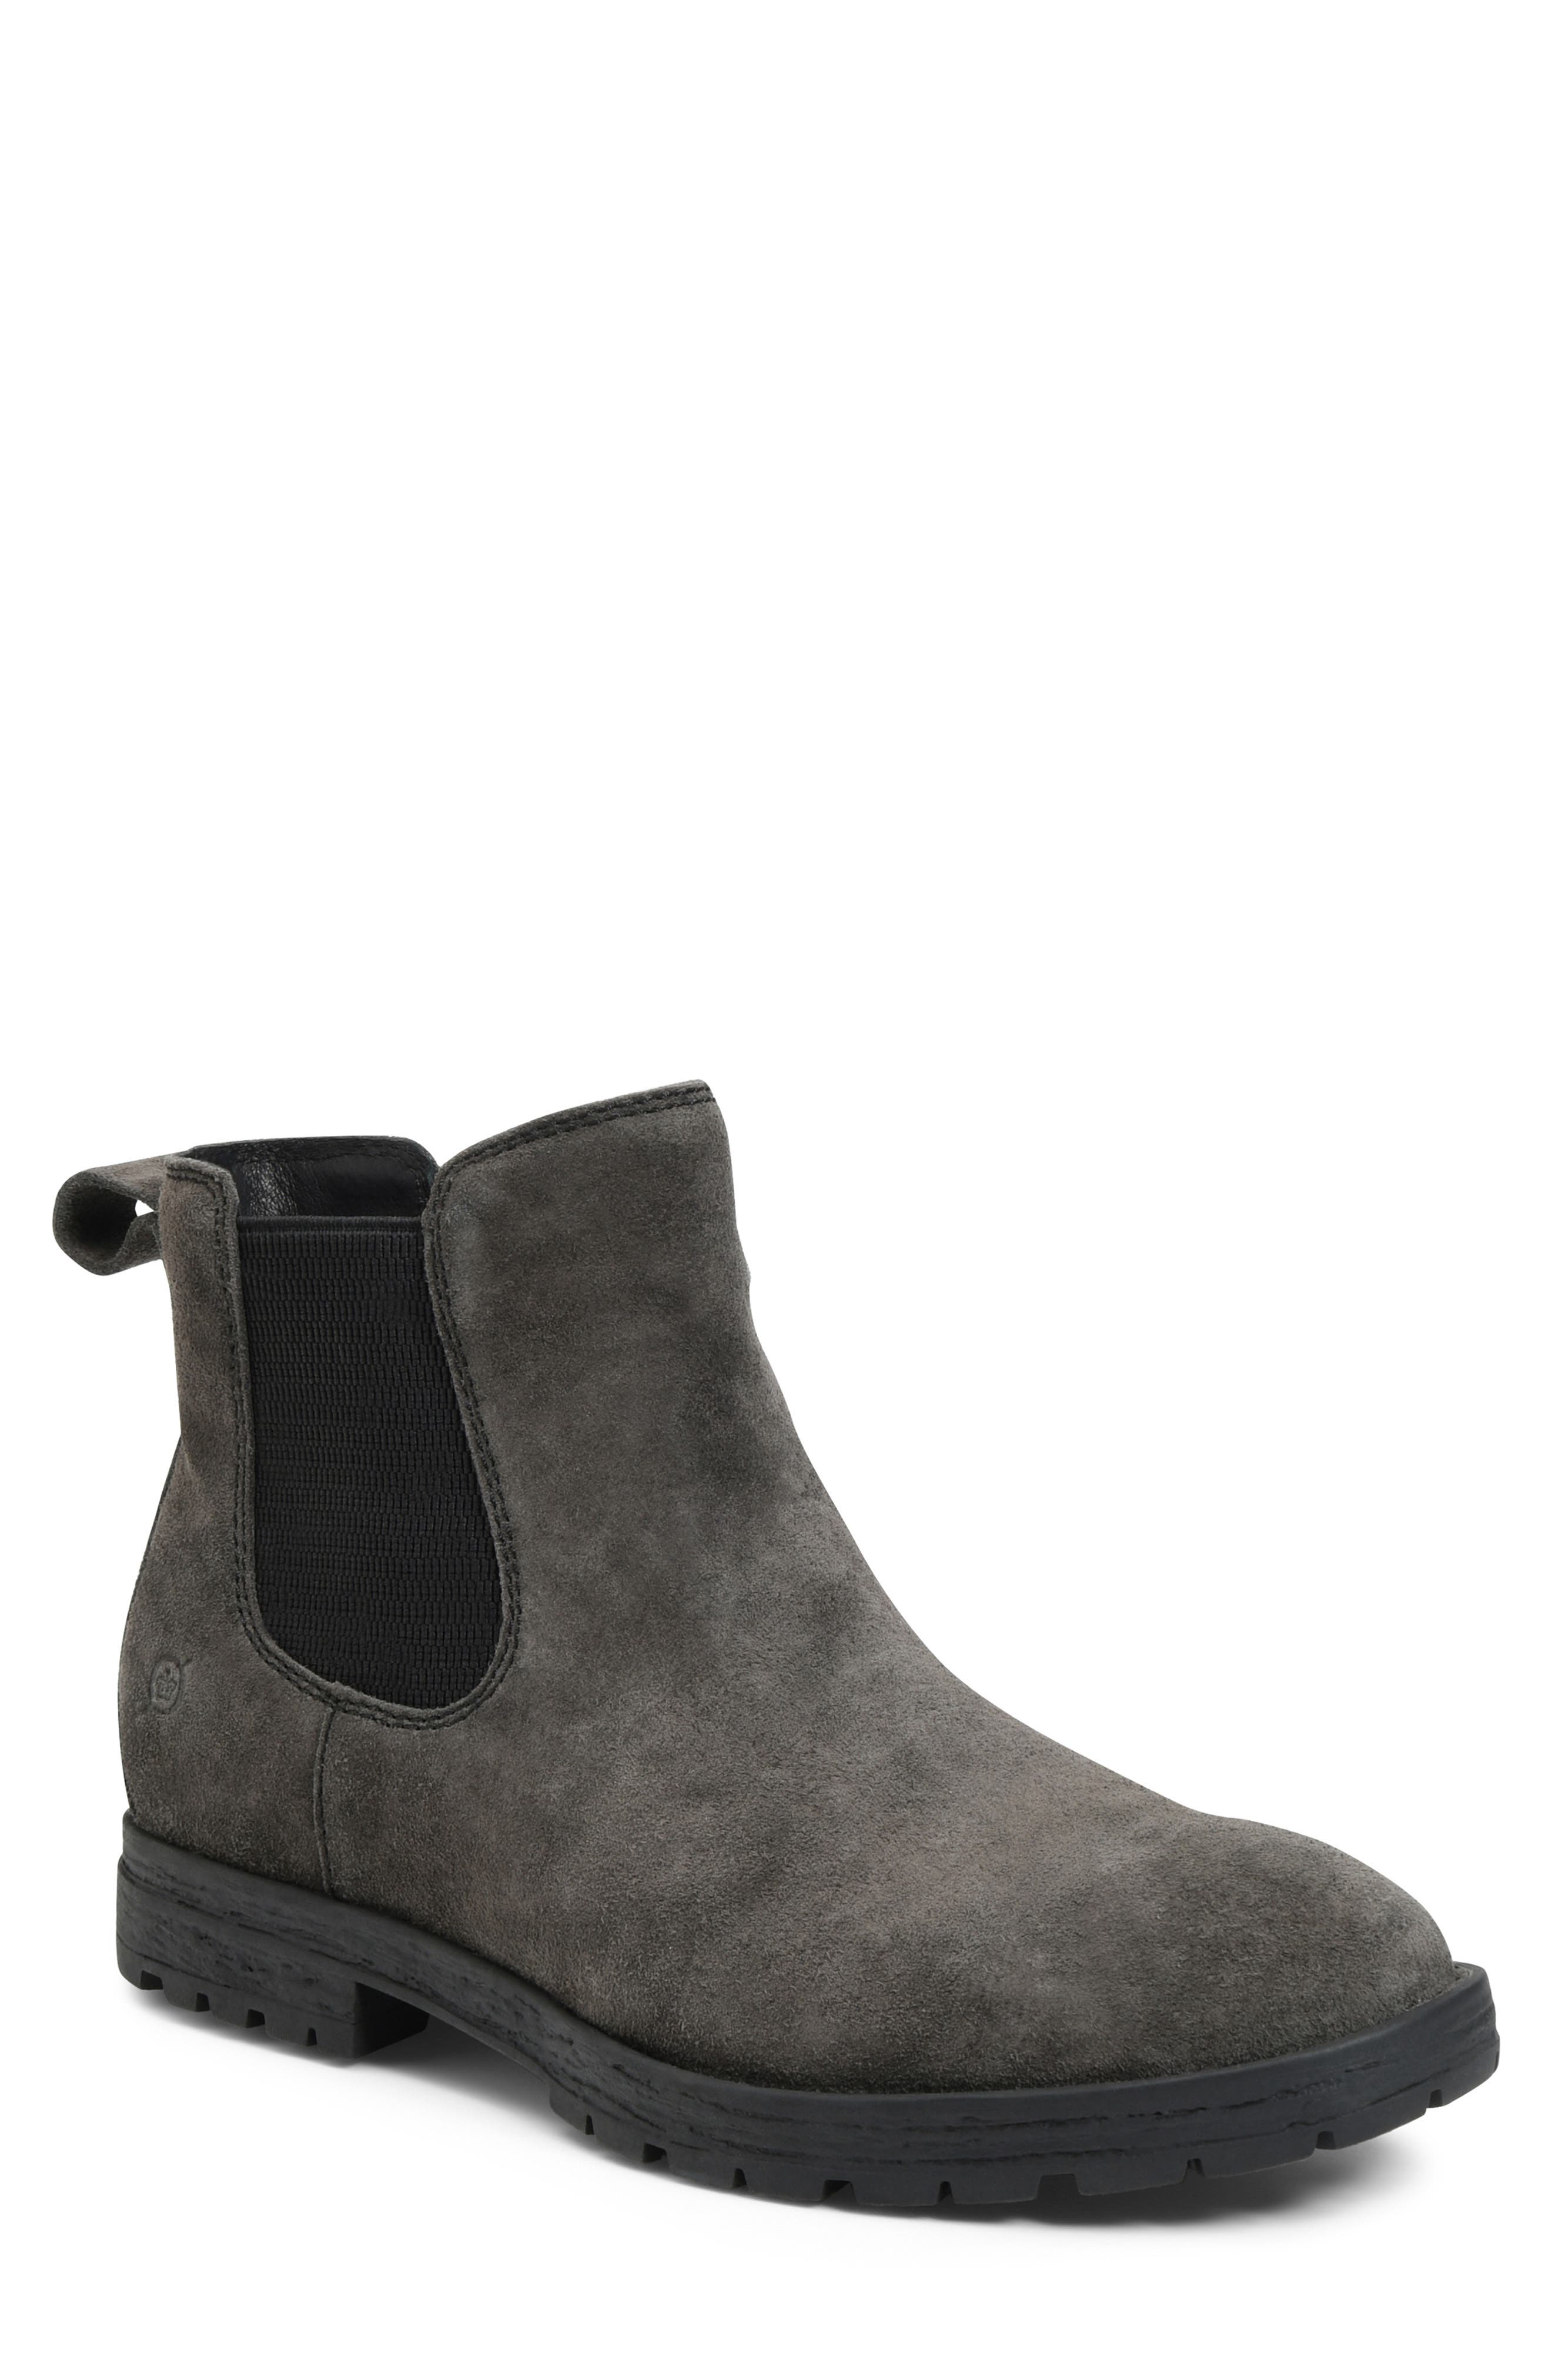 born grey suede boots